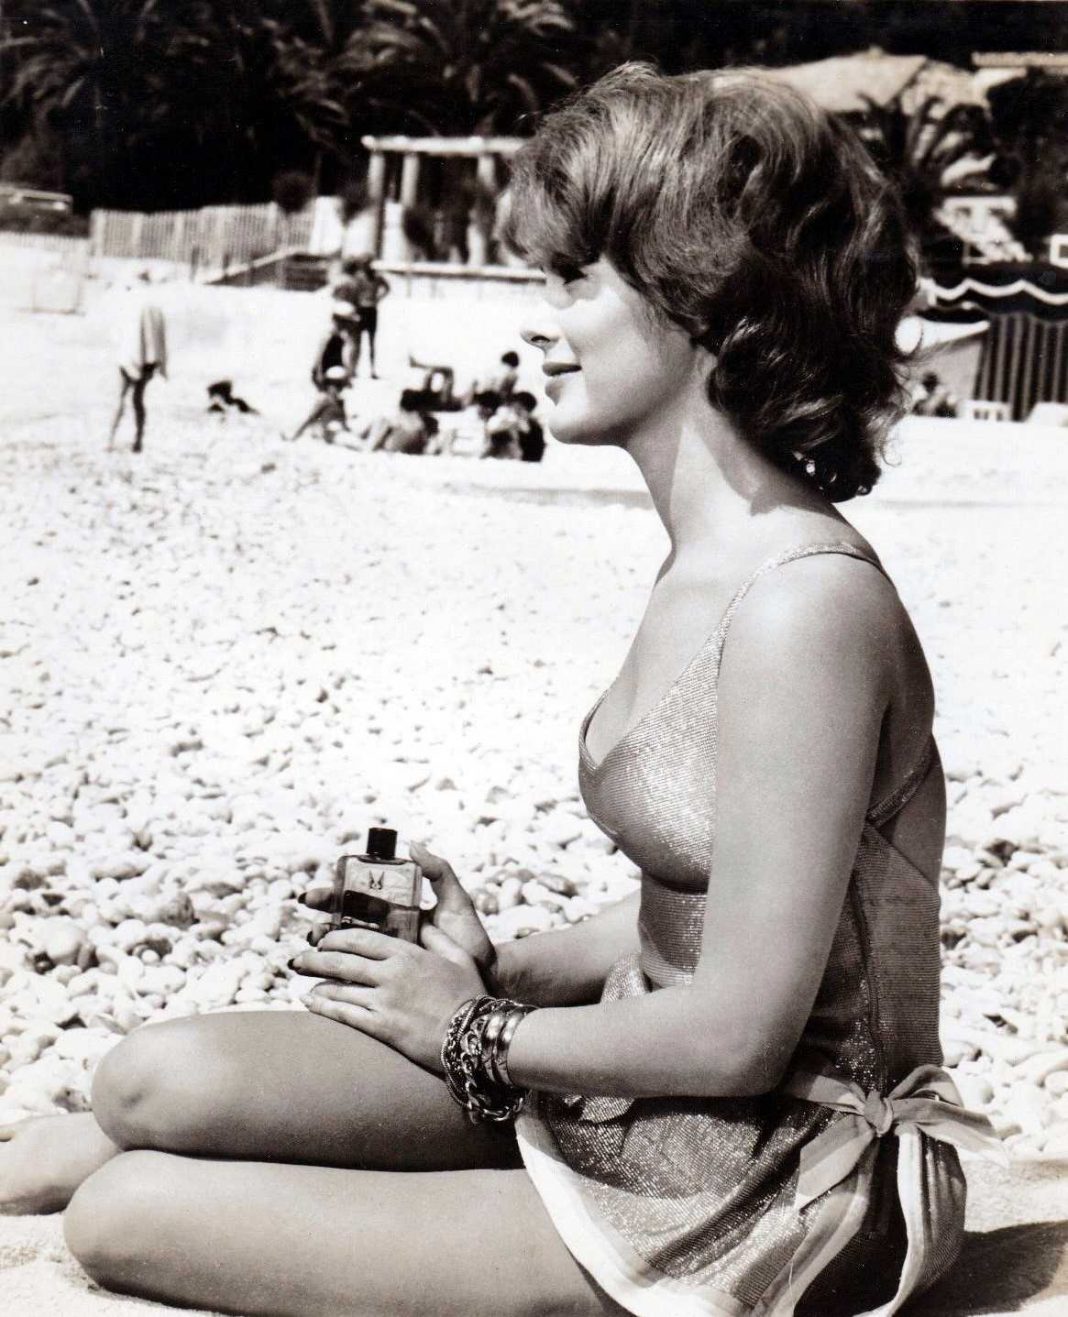 Jill st john nude - Classic Beauty With an IQ of 162: Stunning Photos of Ji...